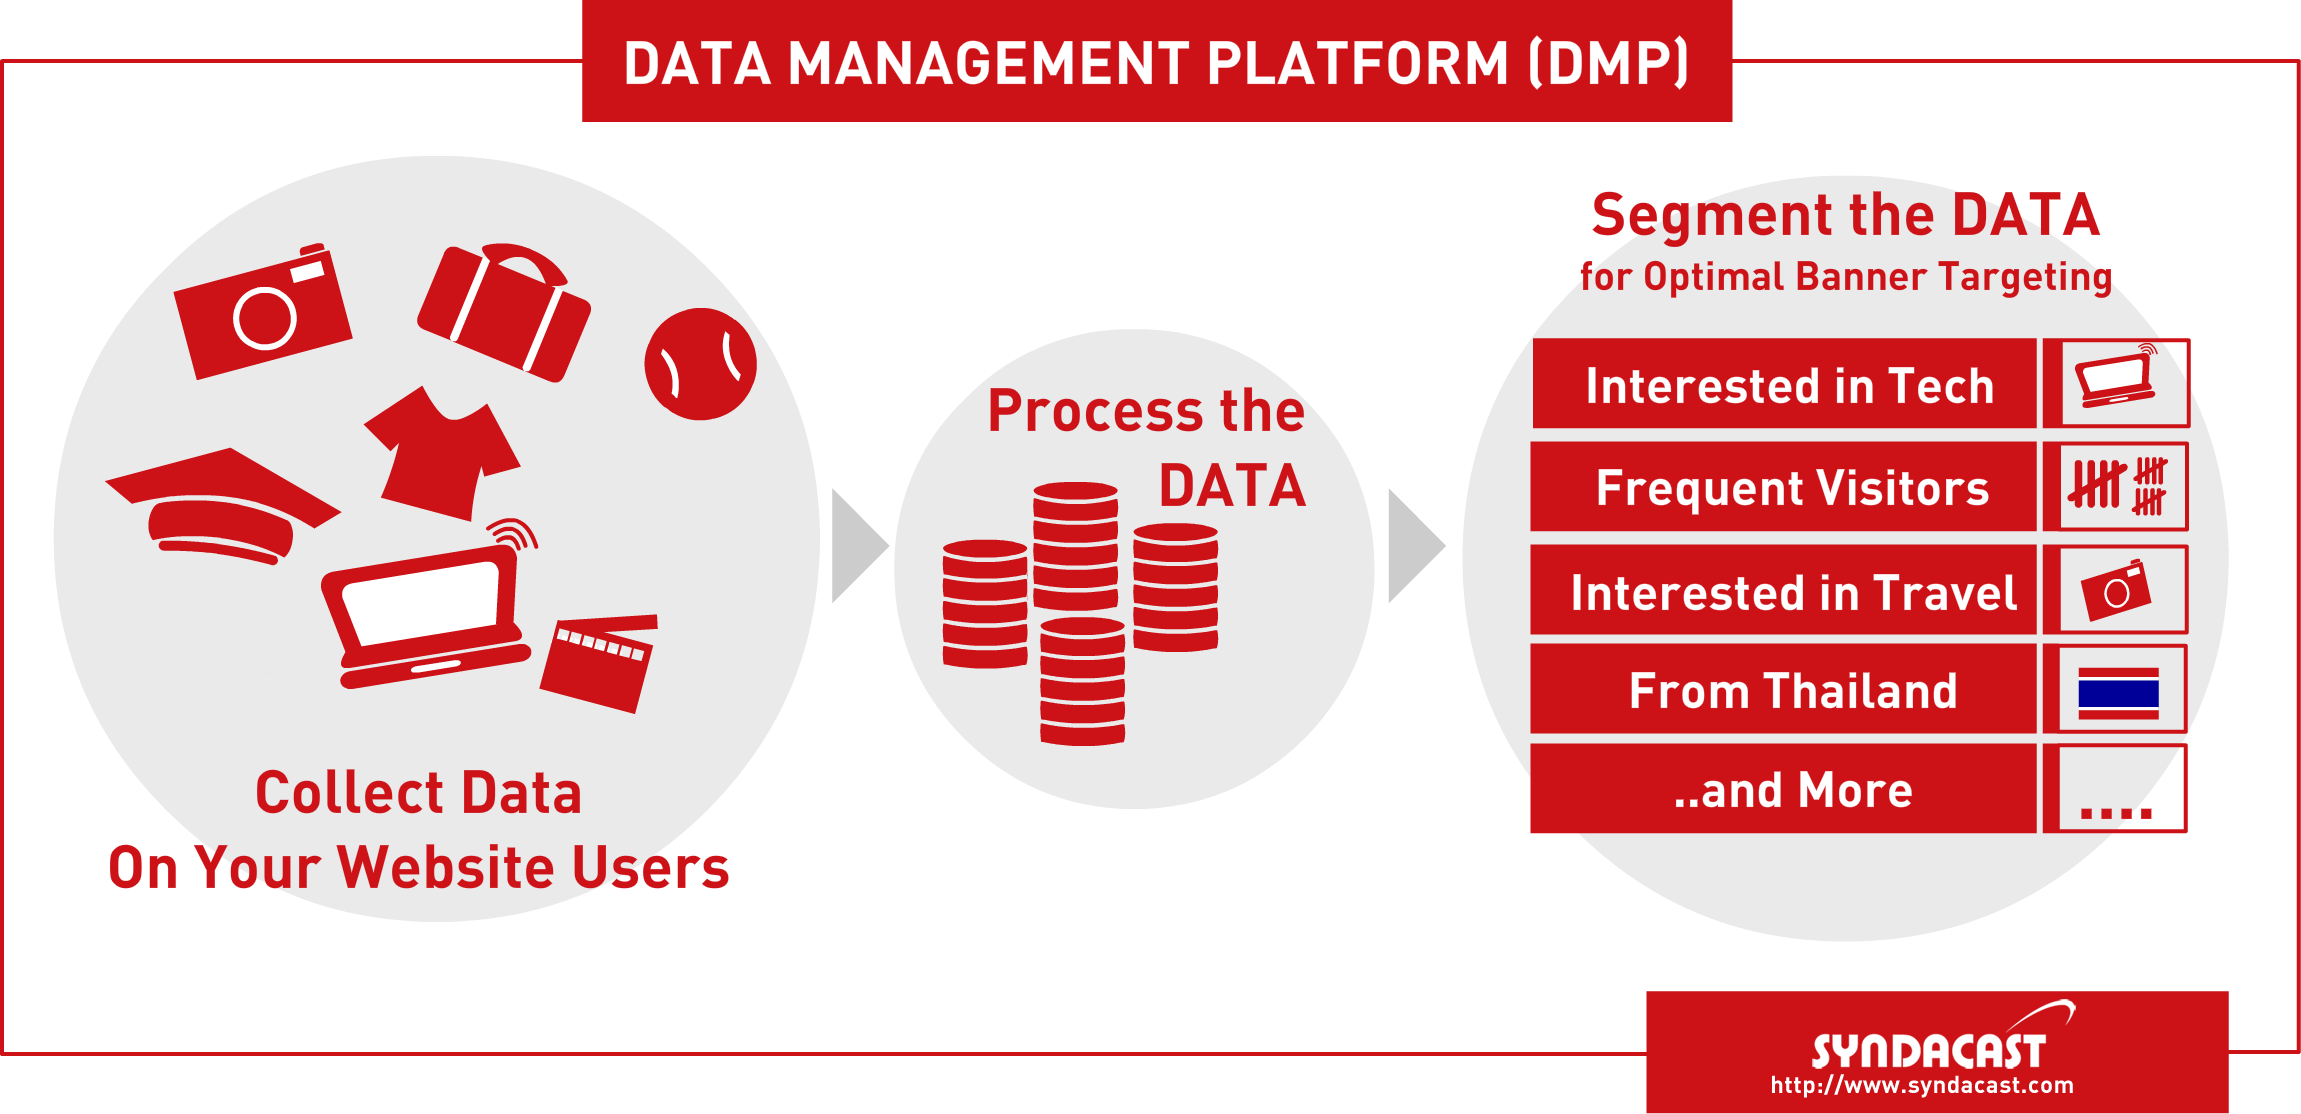 Syndacast DMP Data Management Platform